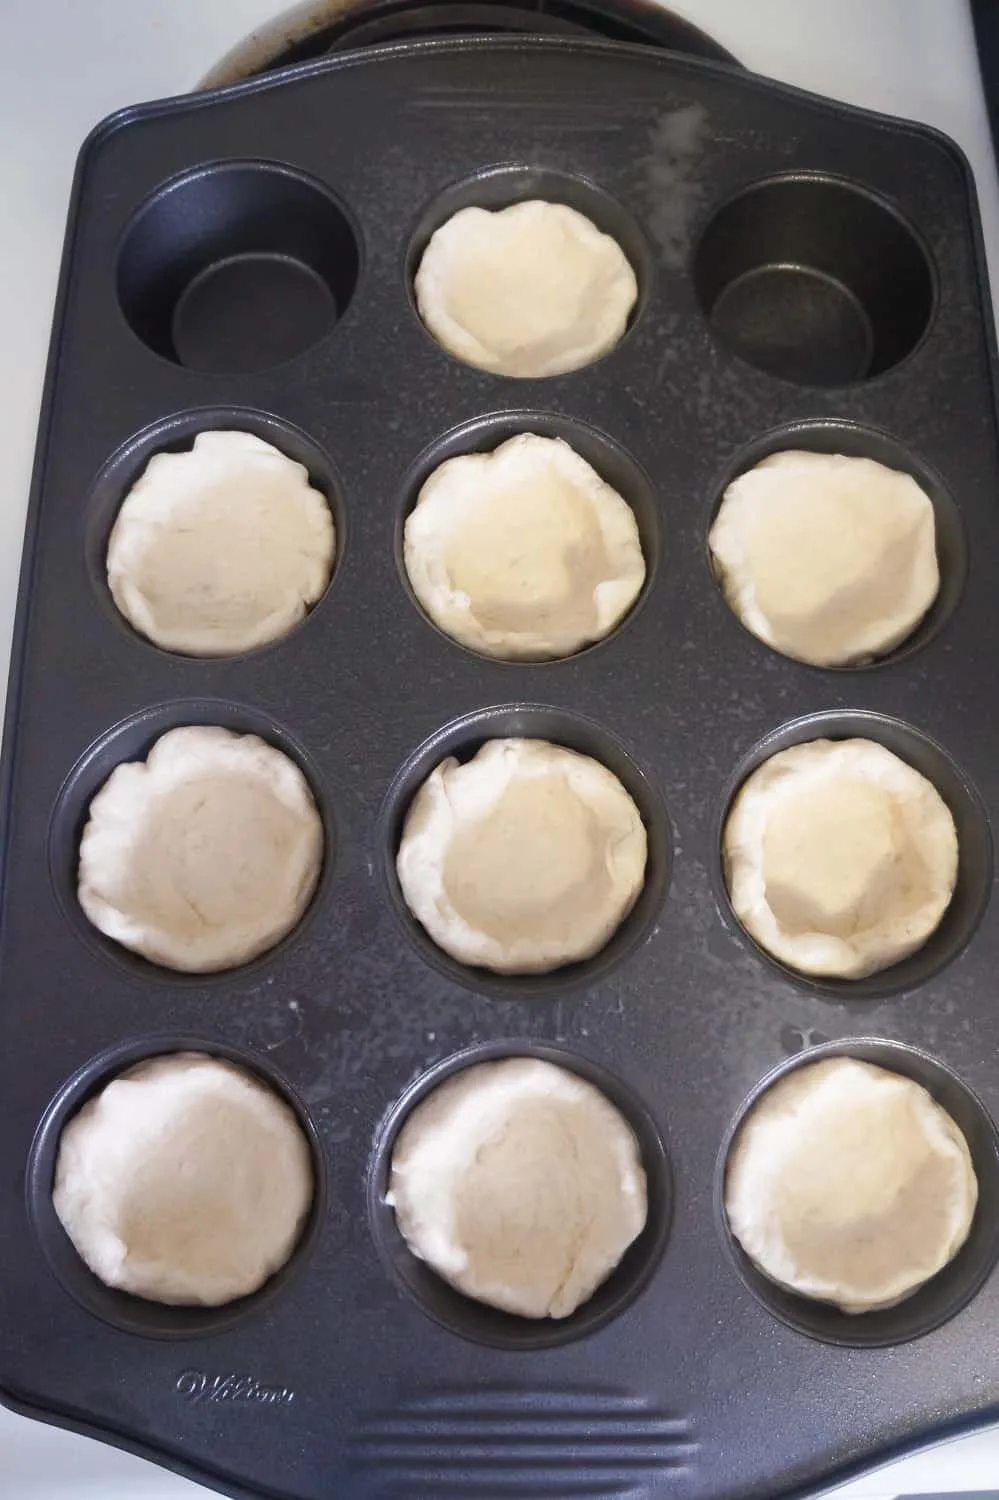 Pillsbury biscuit dough in muffin tins